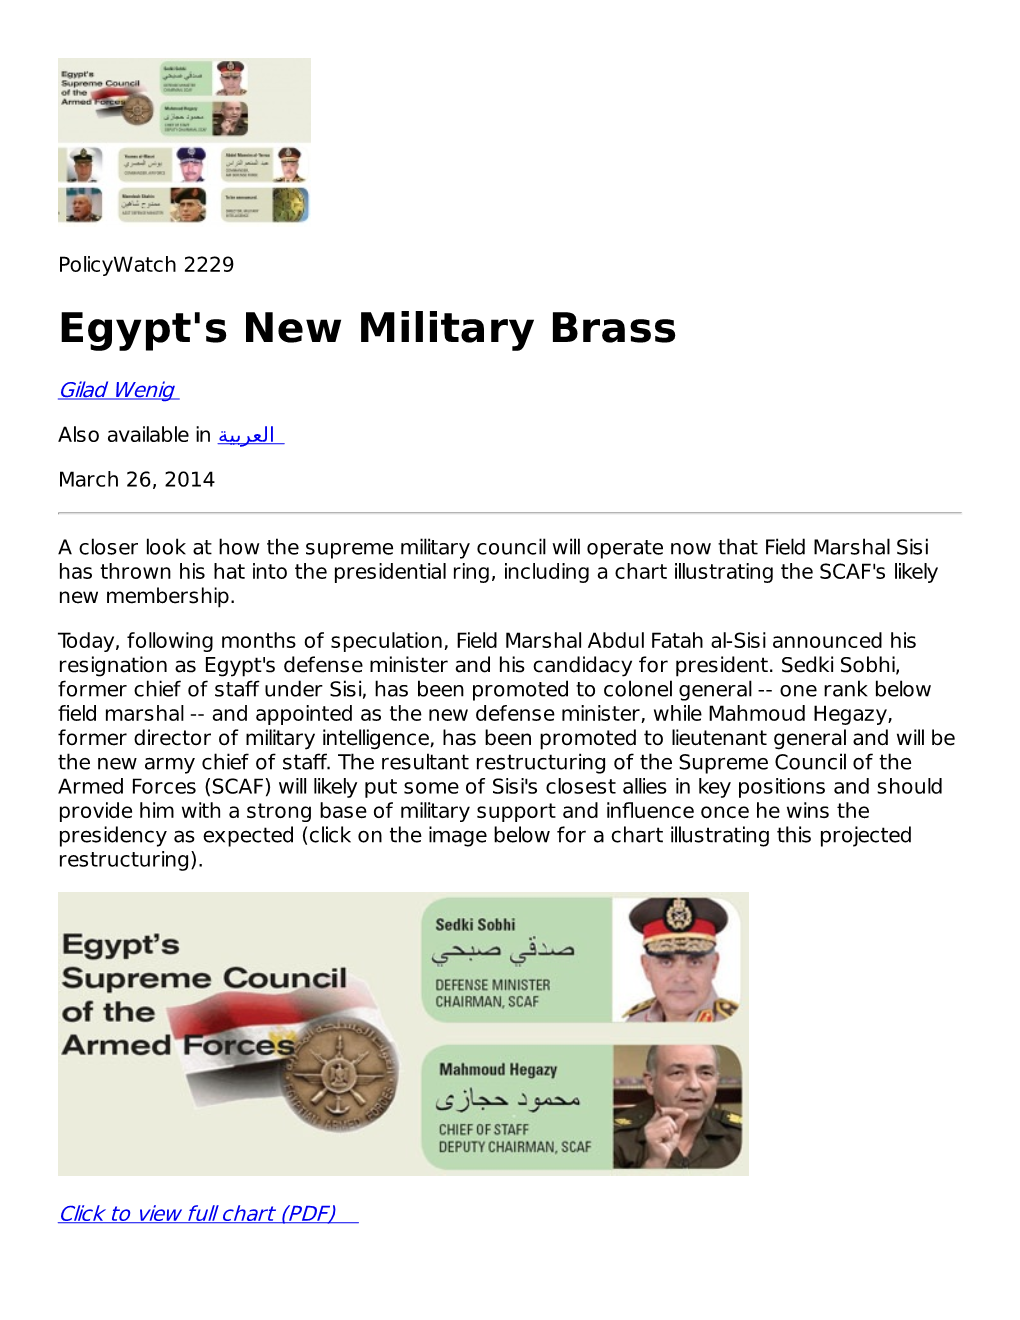 Egypt's New Military Brass